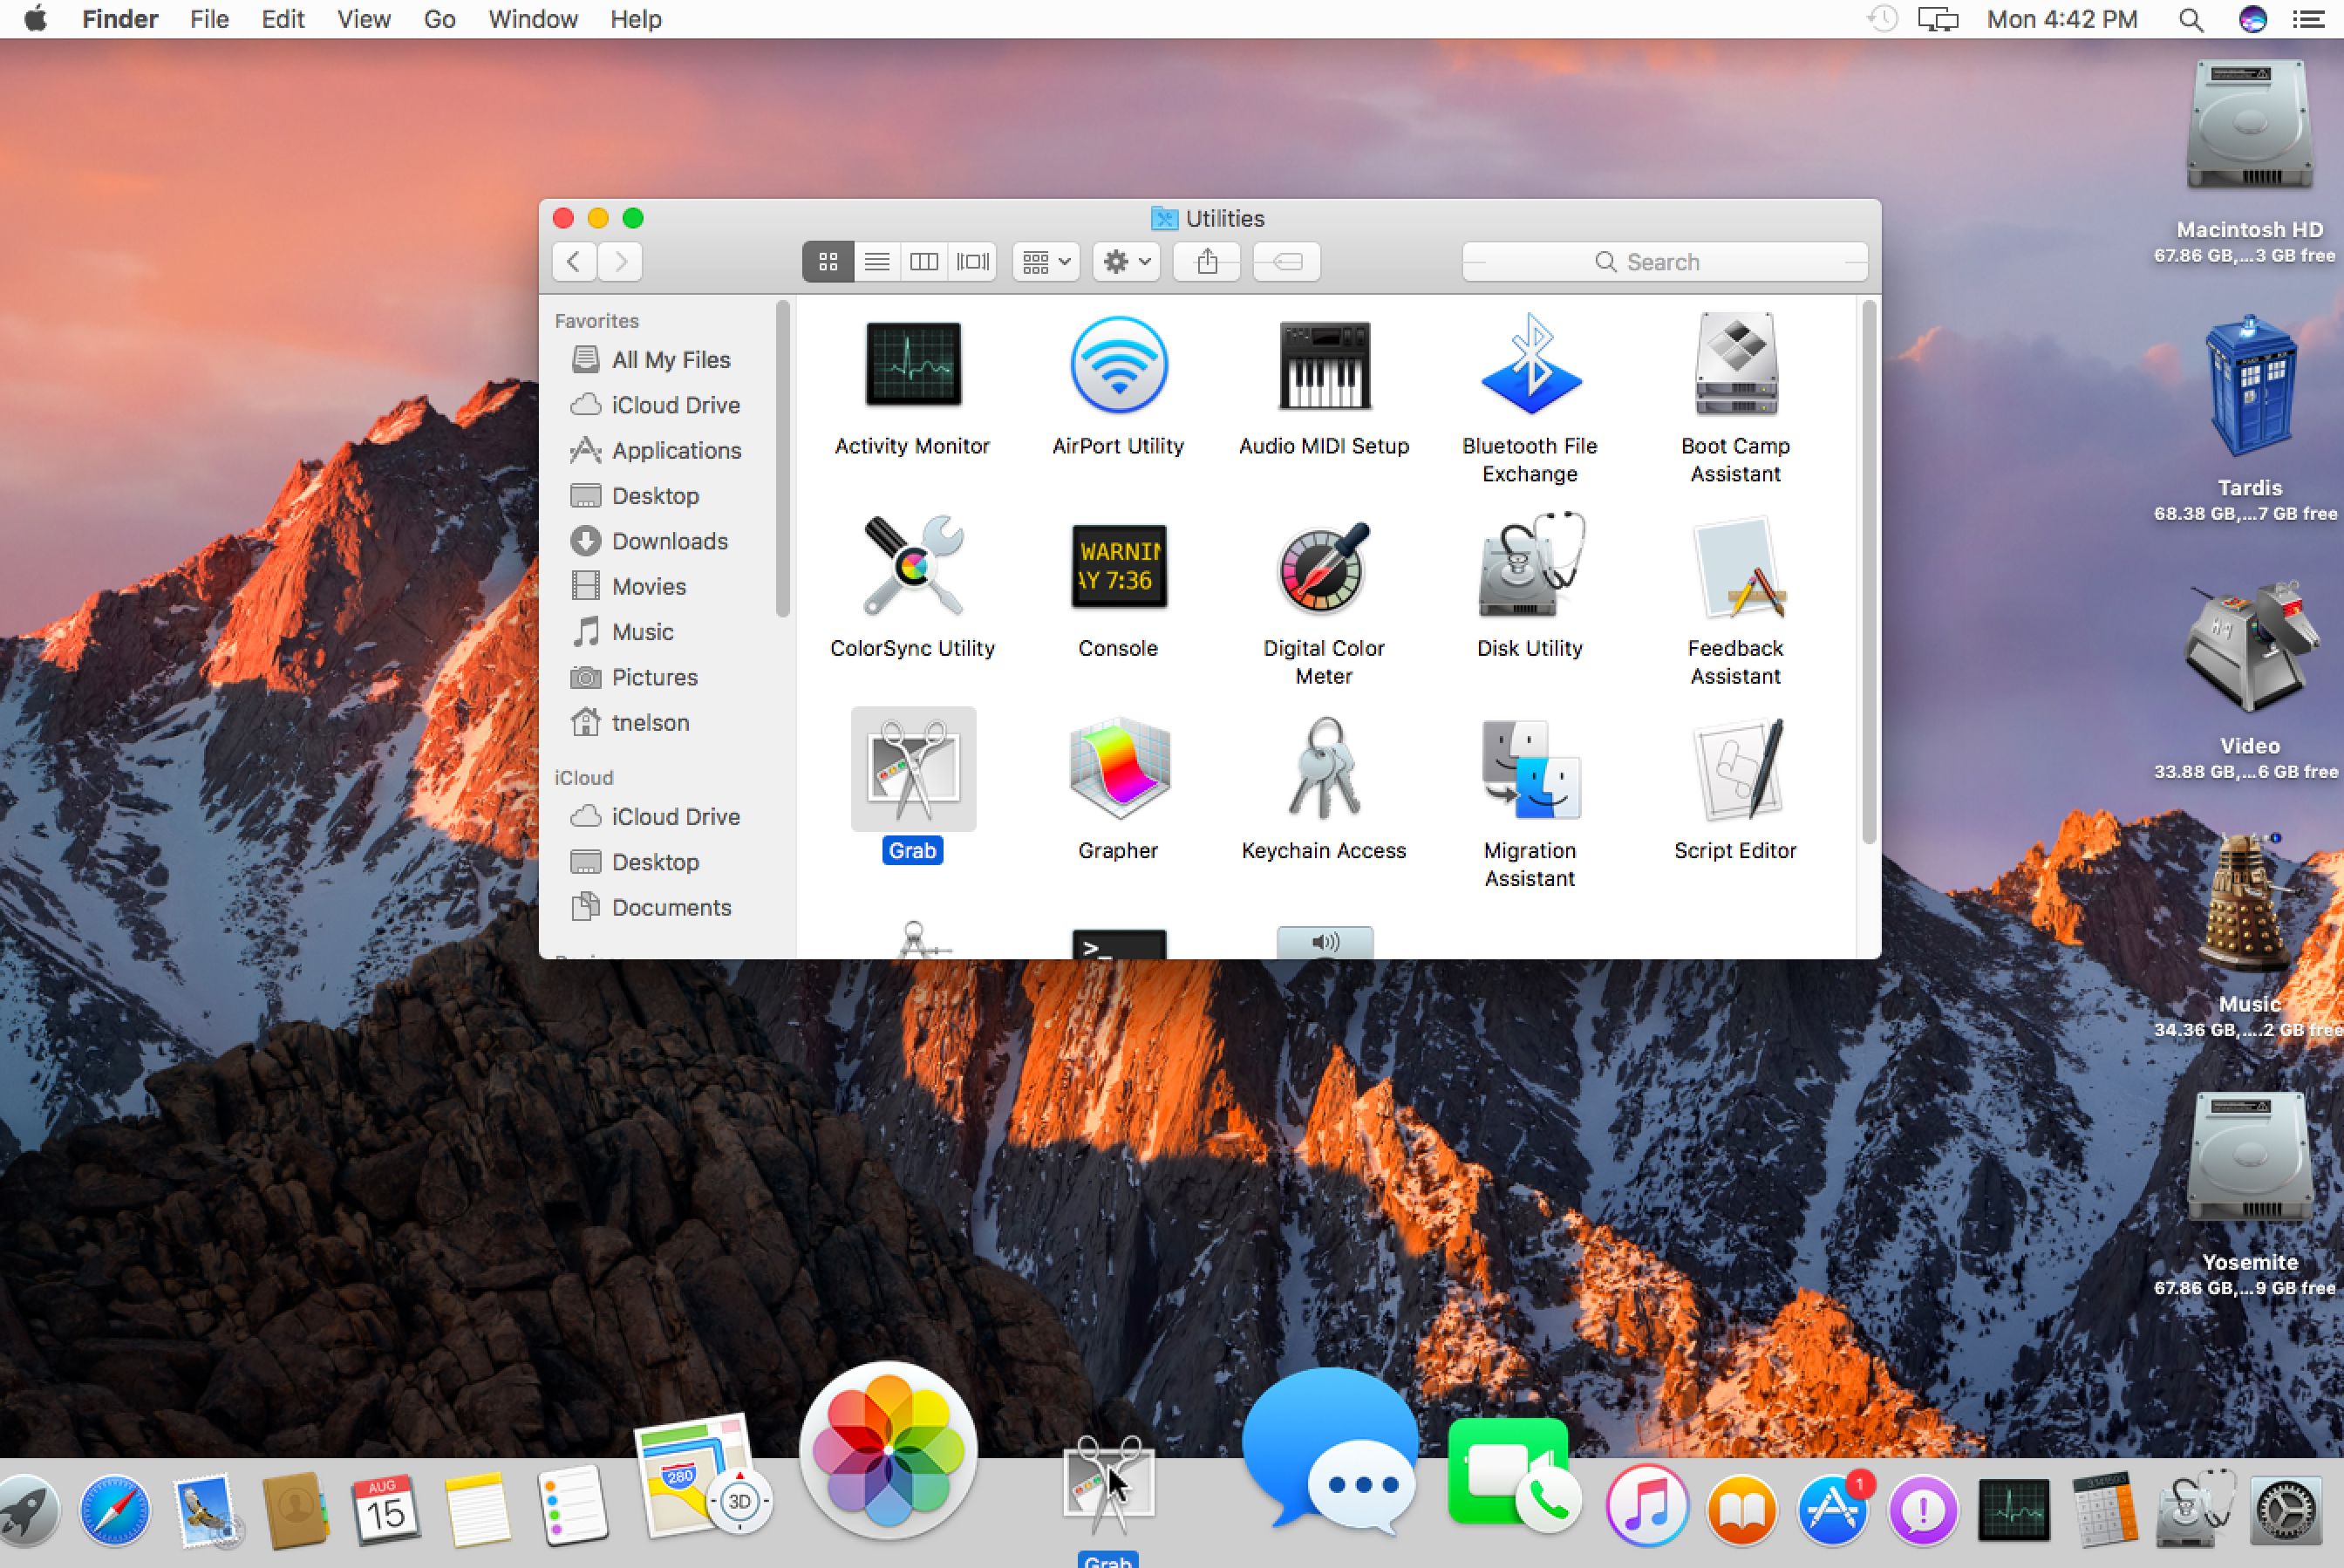 Mac App Icon On Desktop And Dock